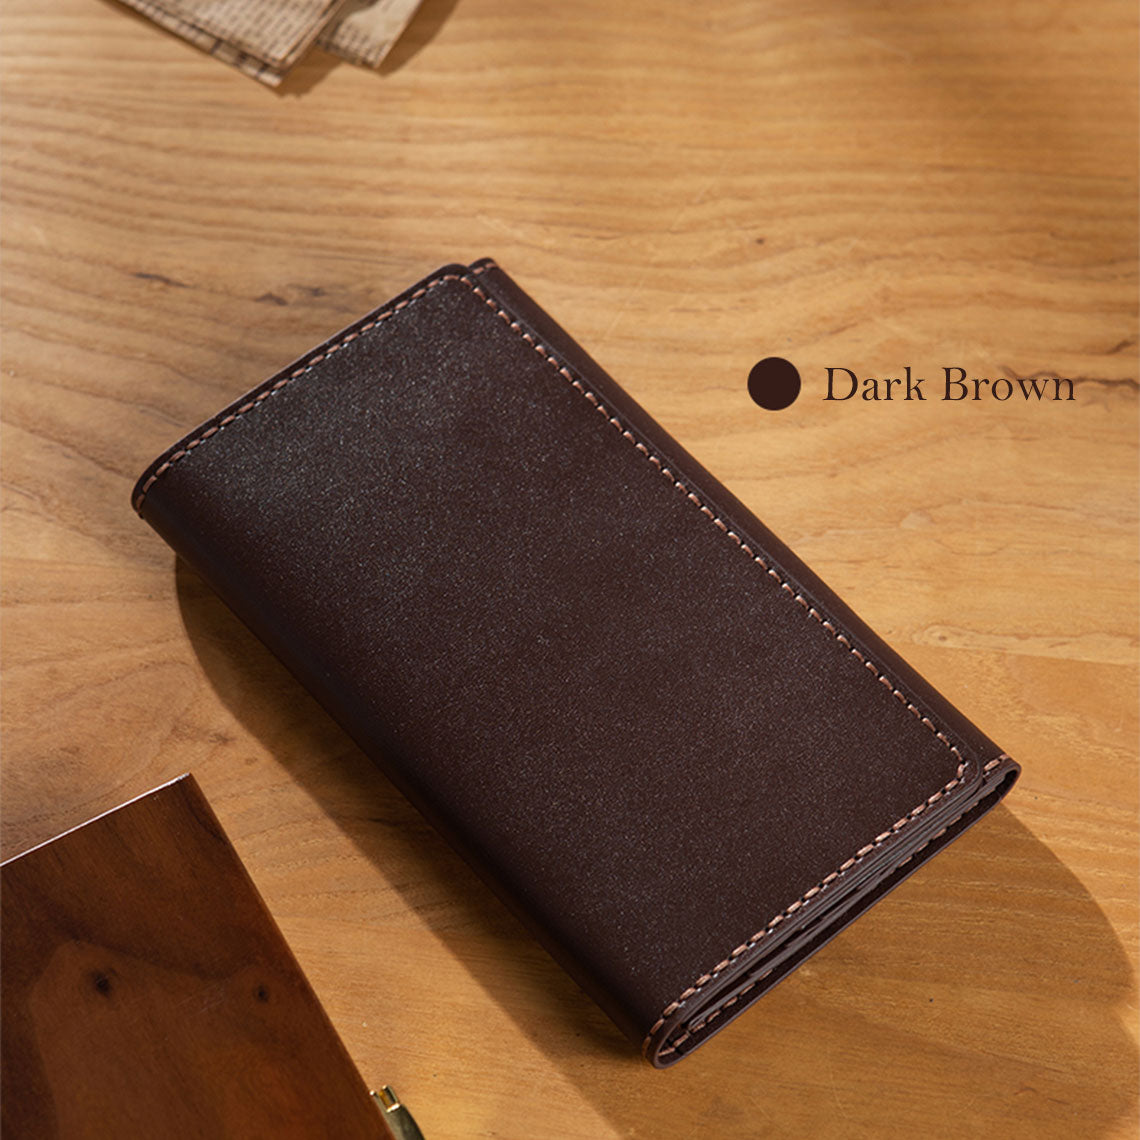 Handmade genuine leather long wallet kit | Brown bifold long wallet